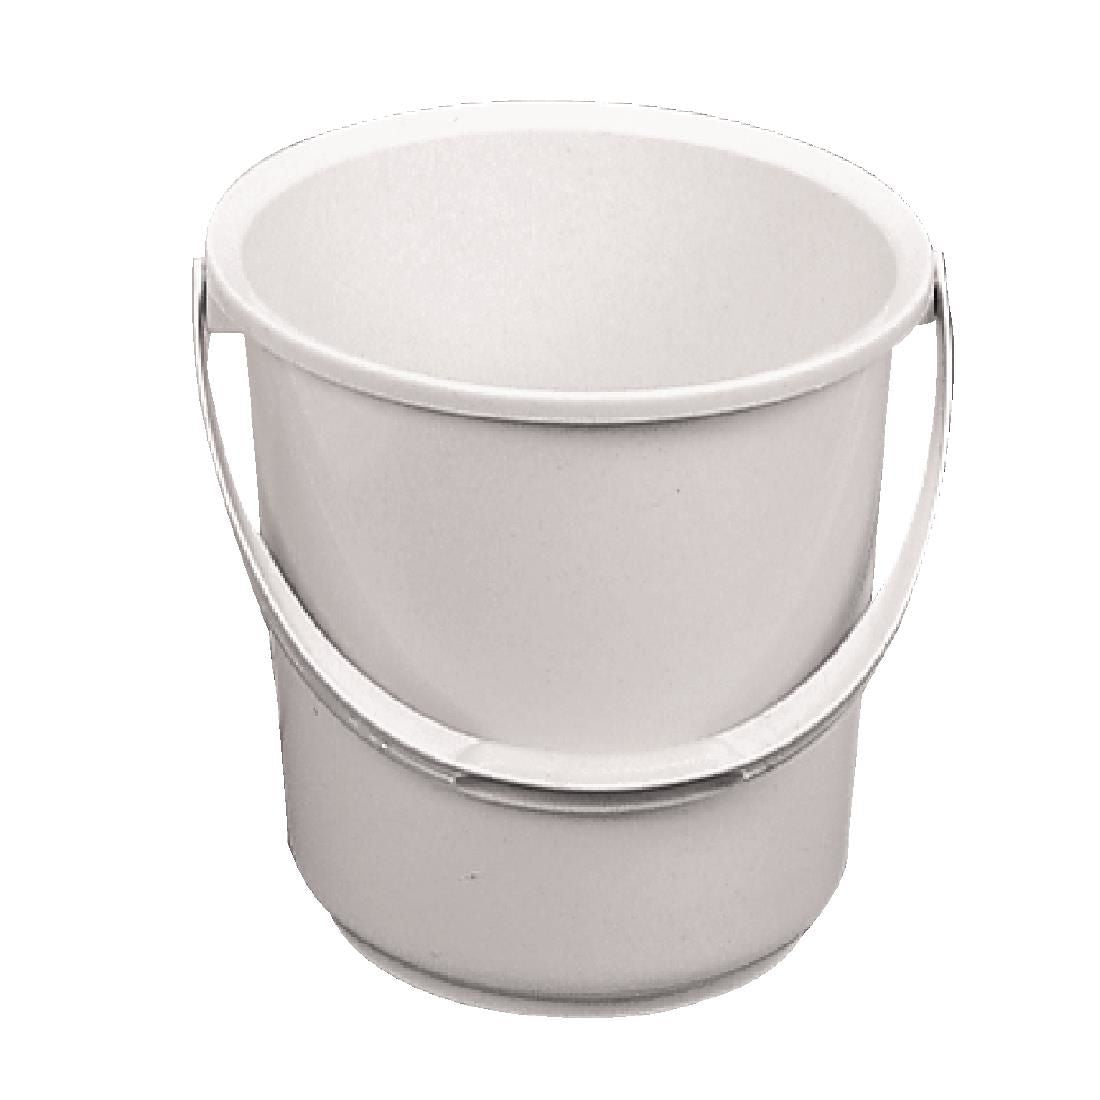 Jantex Plastic Bucket White 8Ltr JD Catering Equipment Solutions Ltd